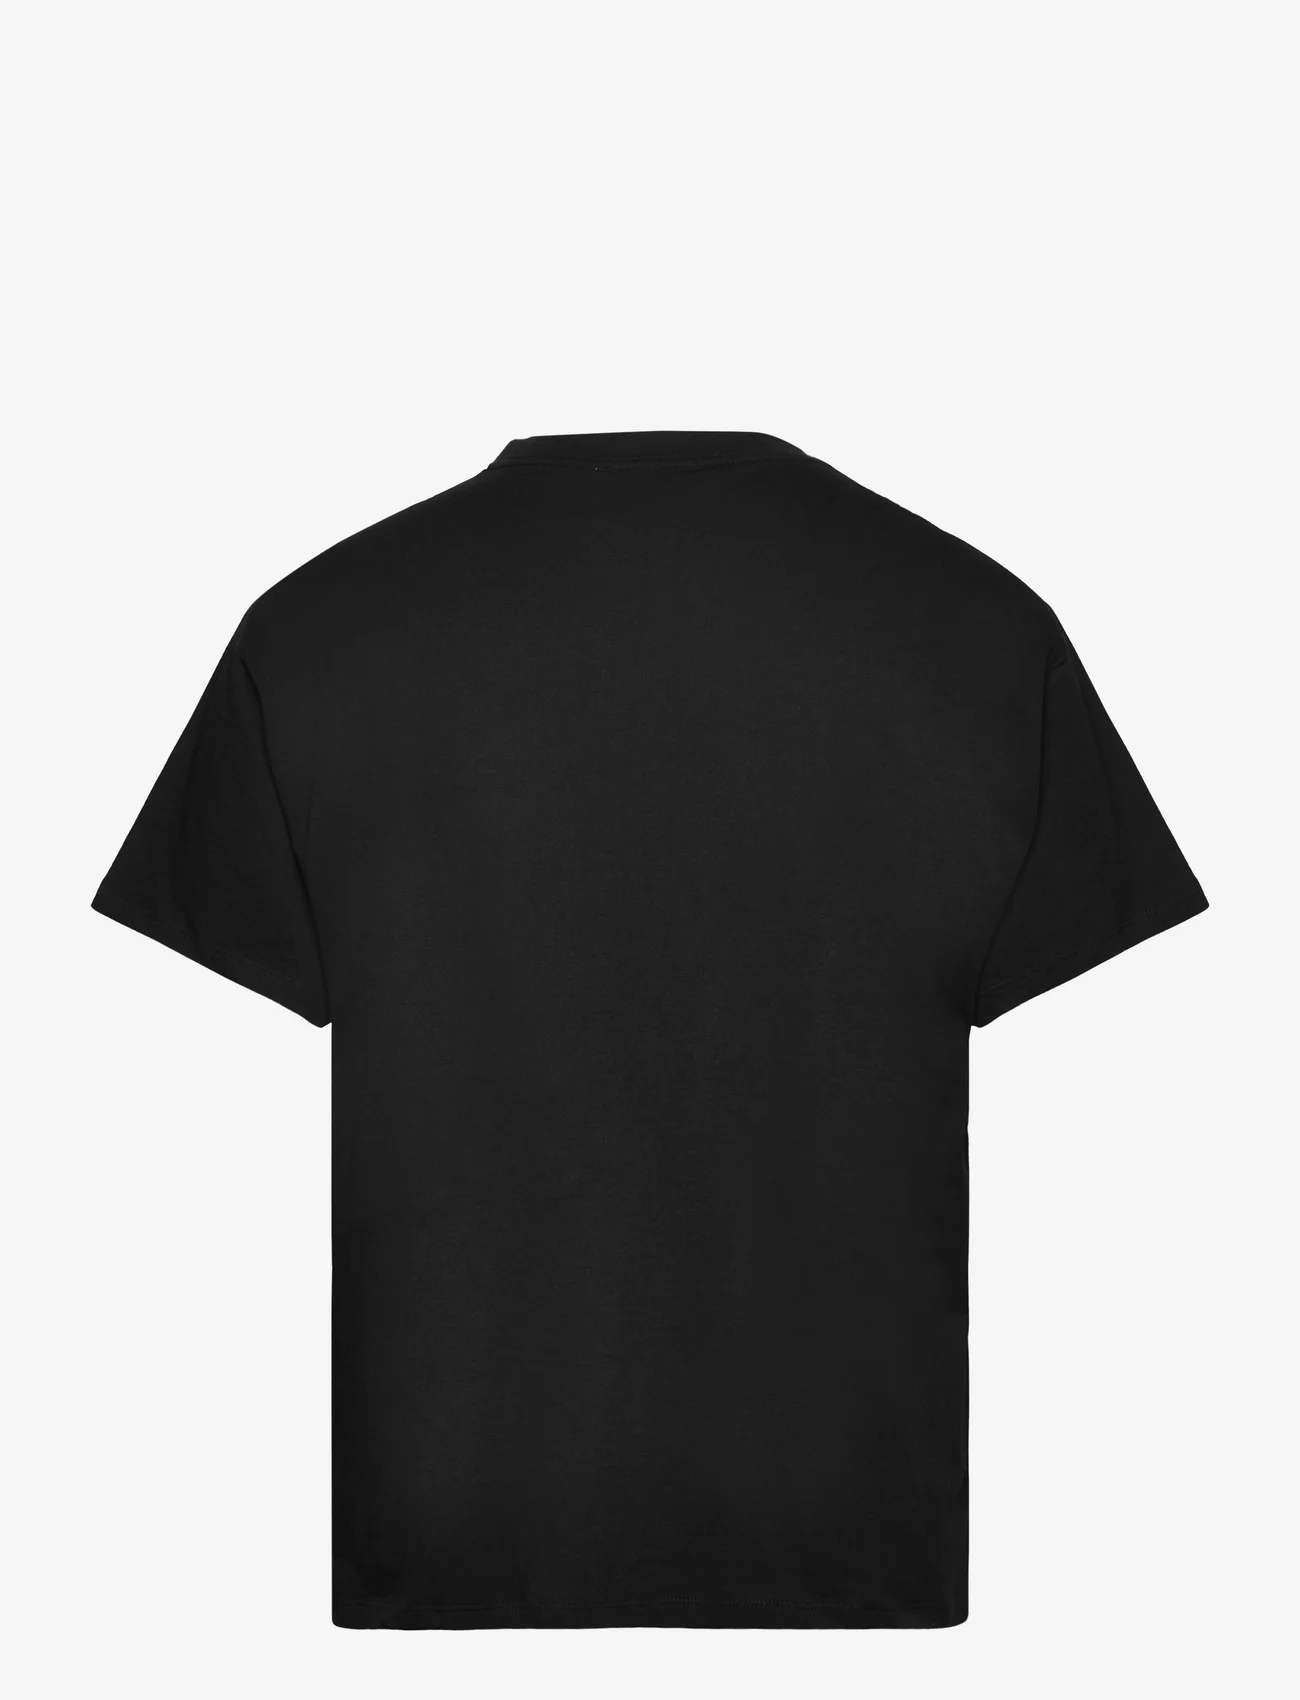 Soulland - ASH T-shirt - t-shirts - black - 1